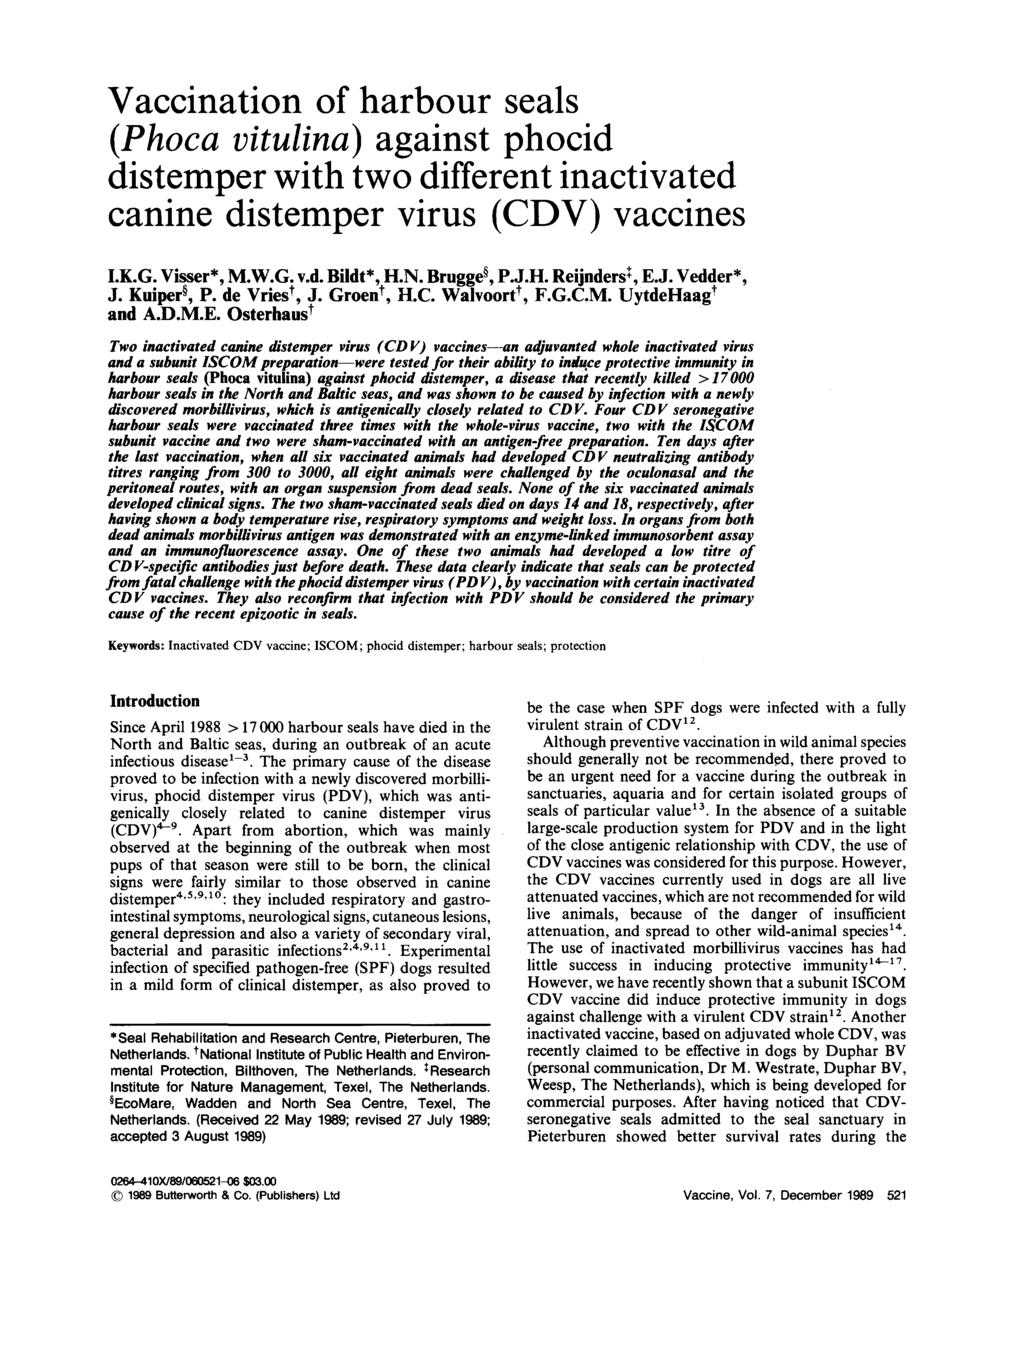 Vaccination of harbour seals (Phoca vitulina) against phocid distemper with two different inactivated canine distemper virus (CDV) vaccines I.K.G. Visser*, M.W.G.v.d. Bildt*, H.N. Brugge, P.J.H. Reijnders ~, E.